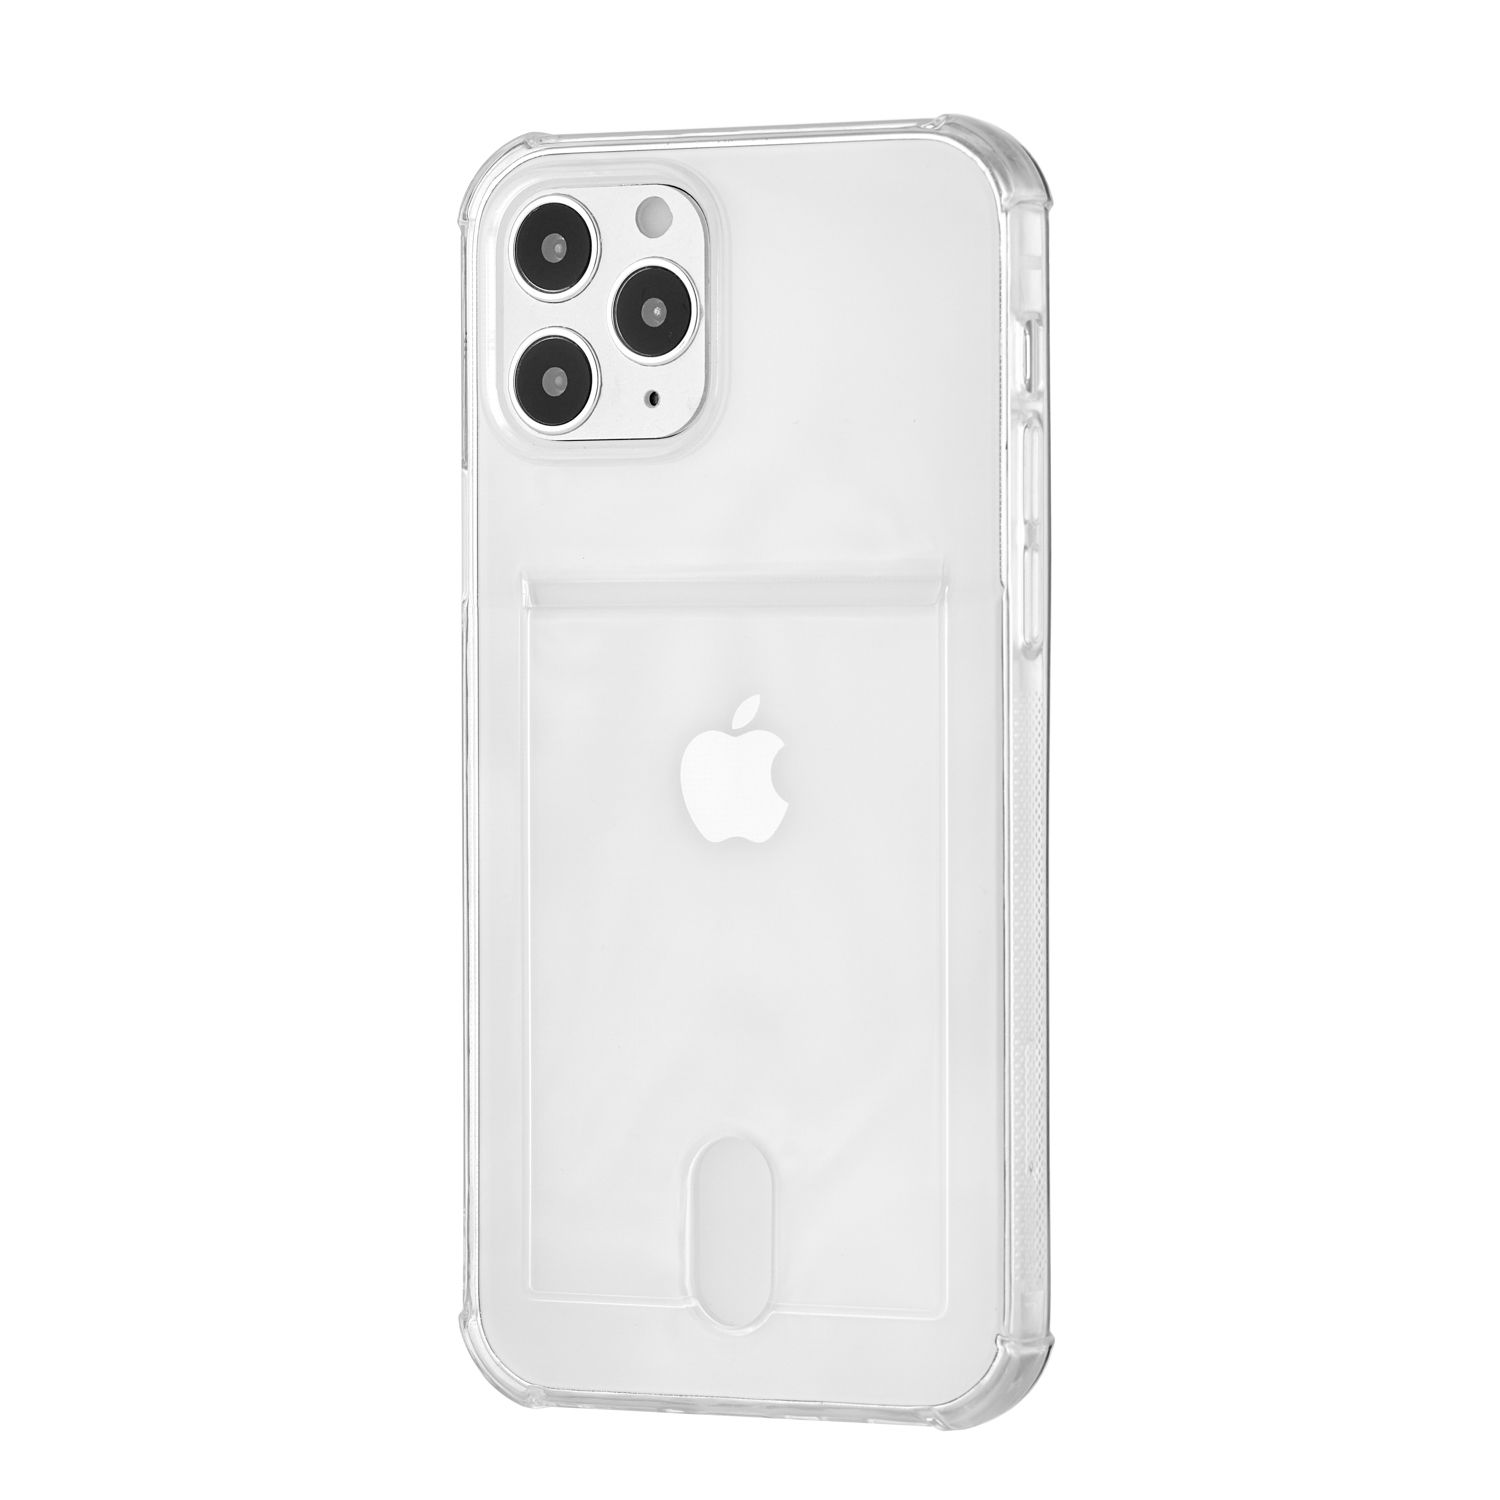 Айфон 11 про макс купить оригинал. Айфон 12 Промакс белый. Iphone 11 Pro Max. Чехол UBEAR Ghost Case для Apple iphone 11. Айфон 11 Промакс белый.